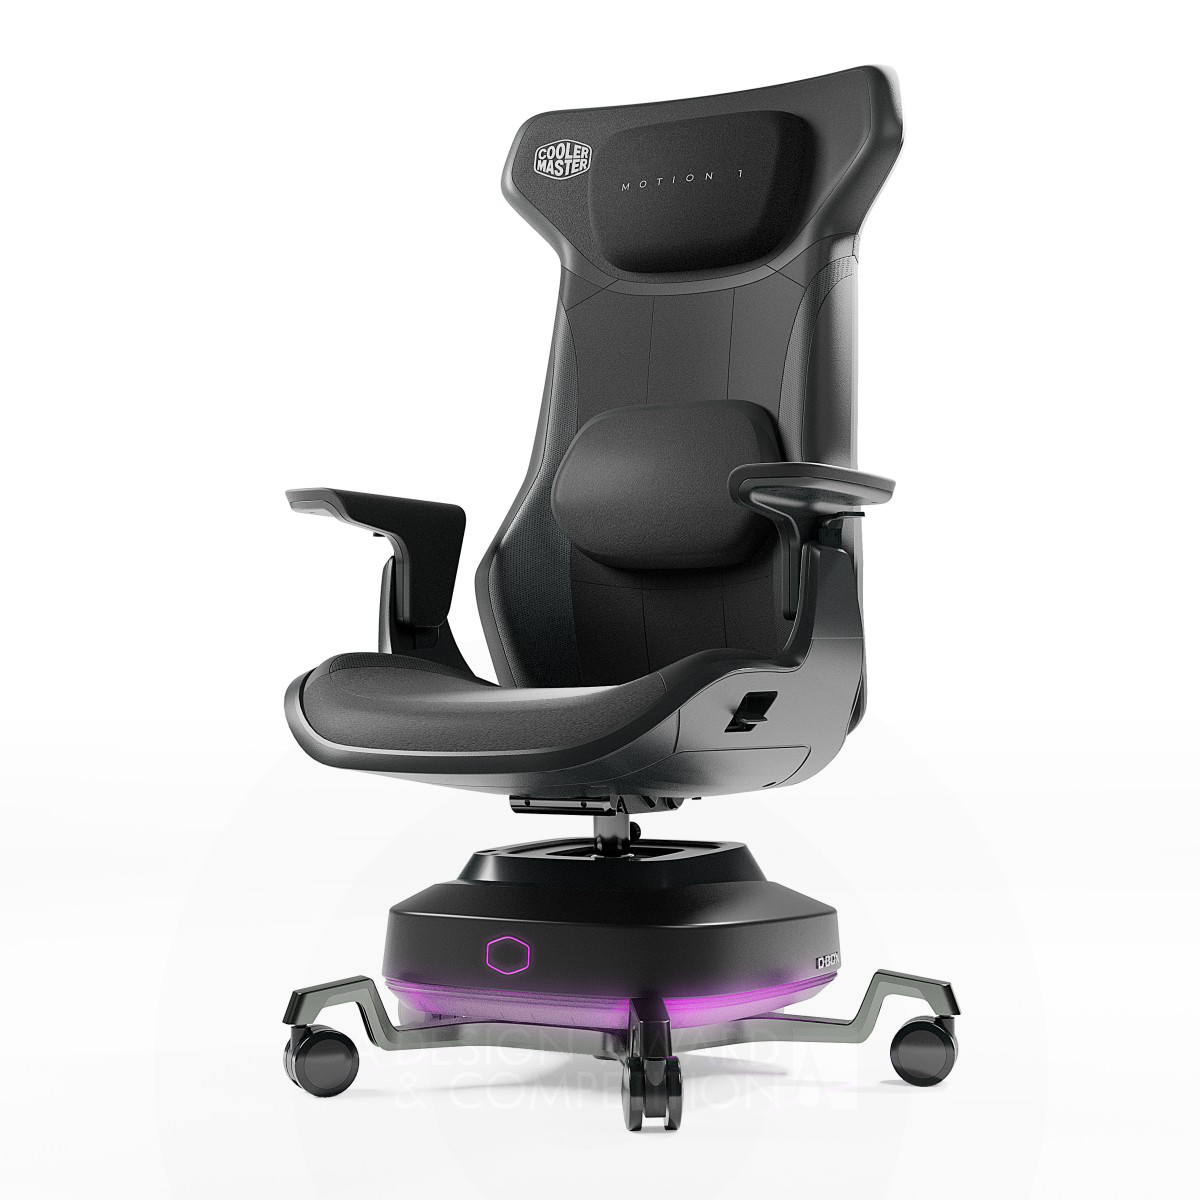  Haptic Gaming Chair